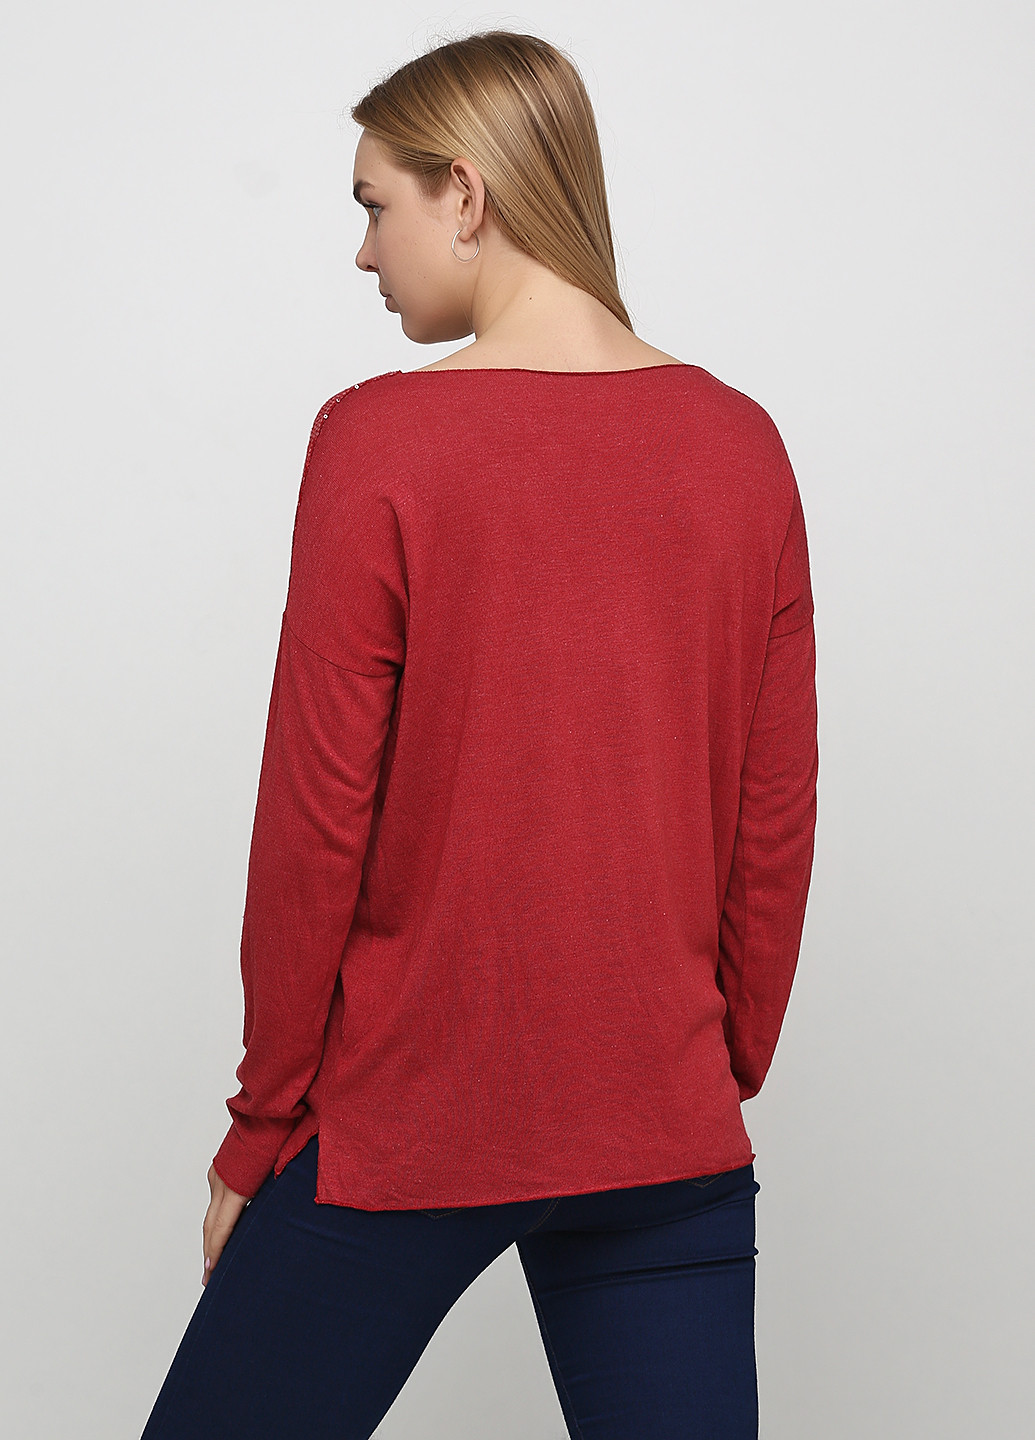 Бордовый демисезонный пуловер пуловер Made in Italy